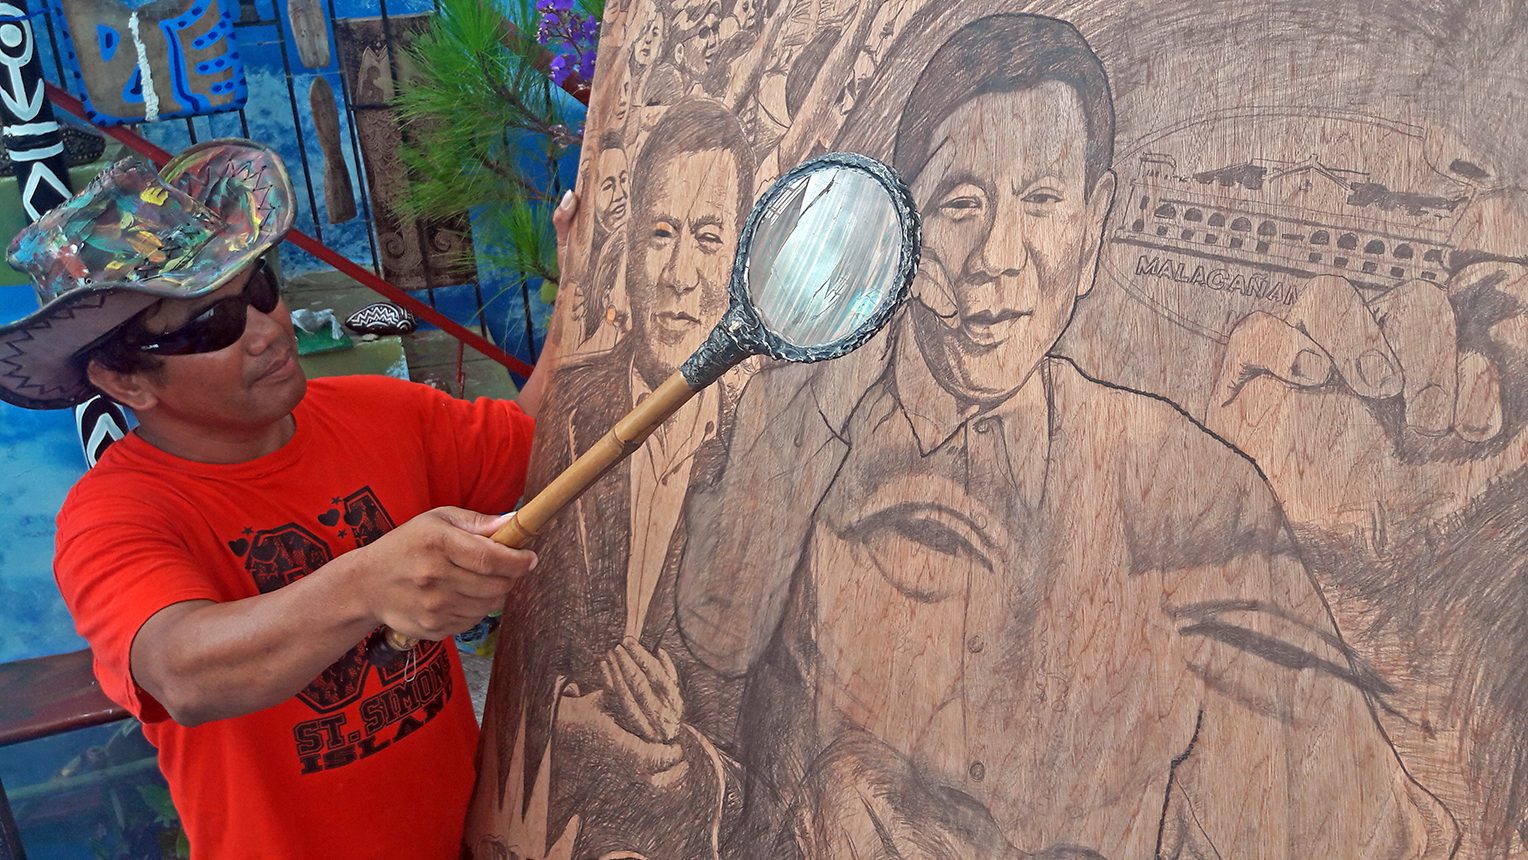 LOOK: Duterte’s portrait drawn with sunlight